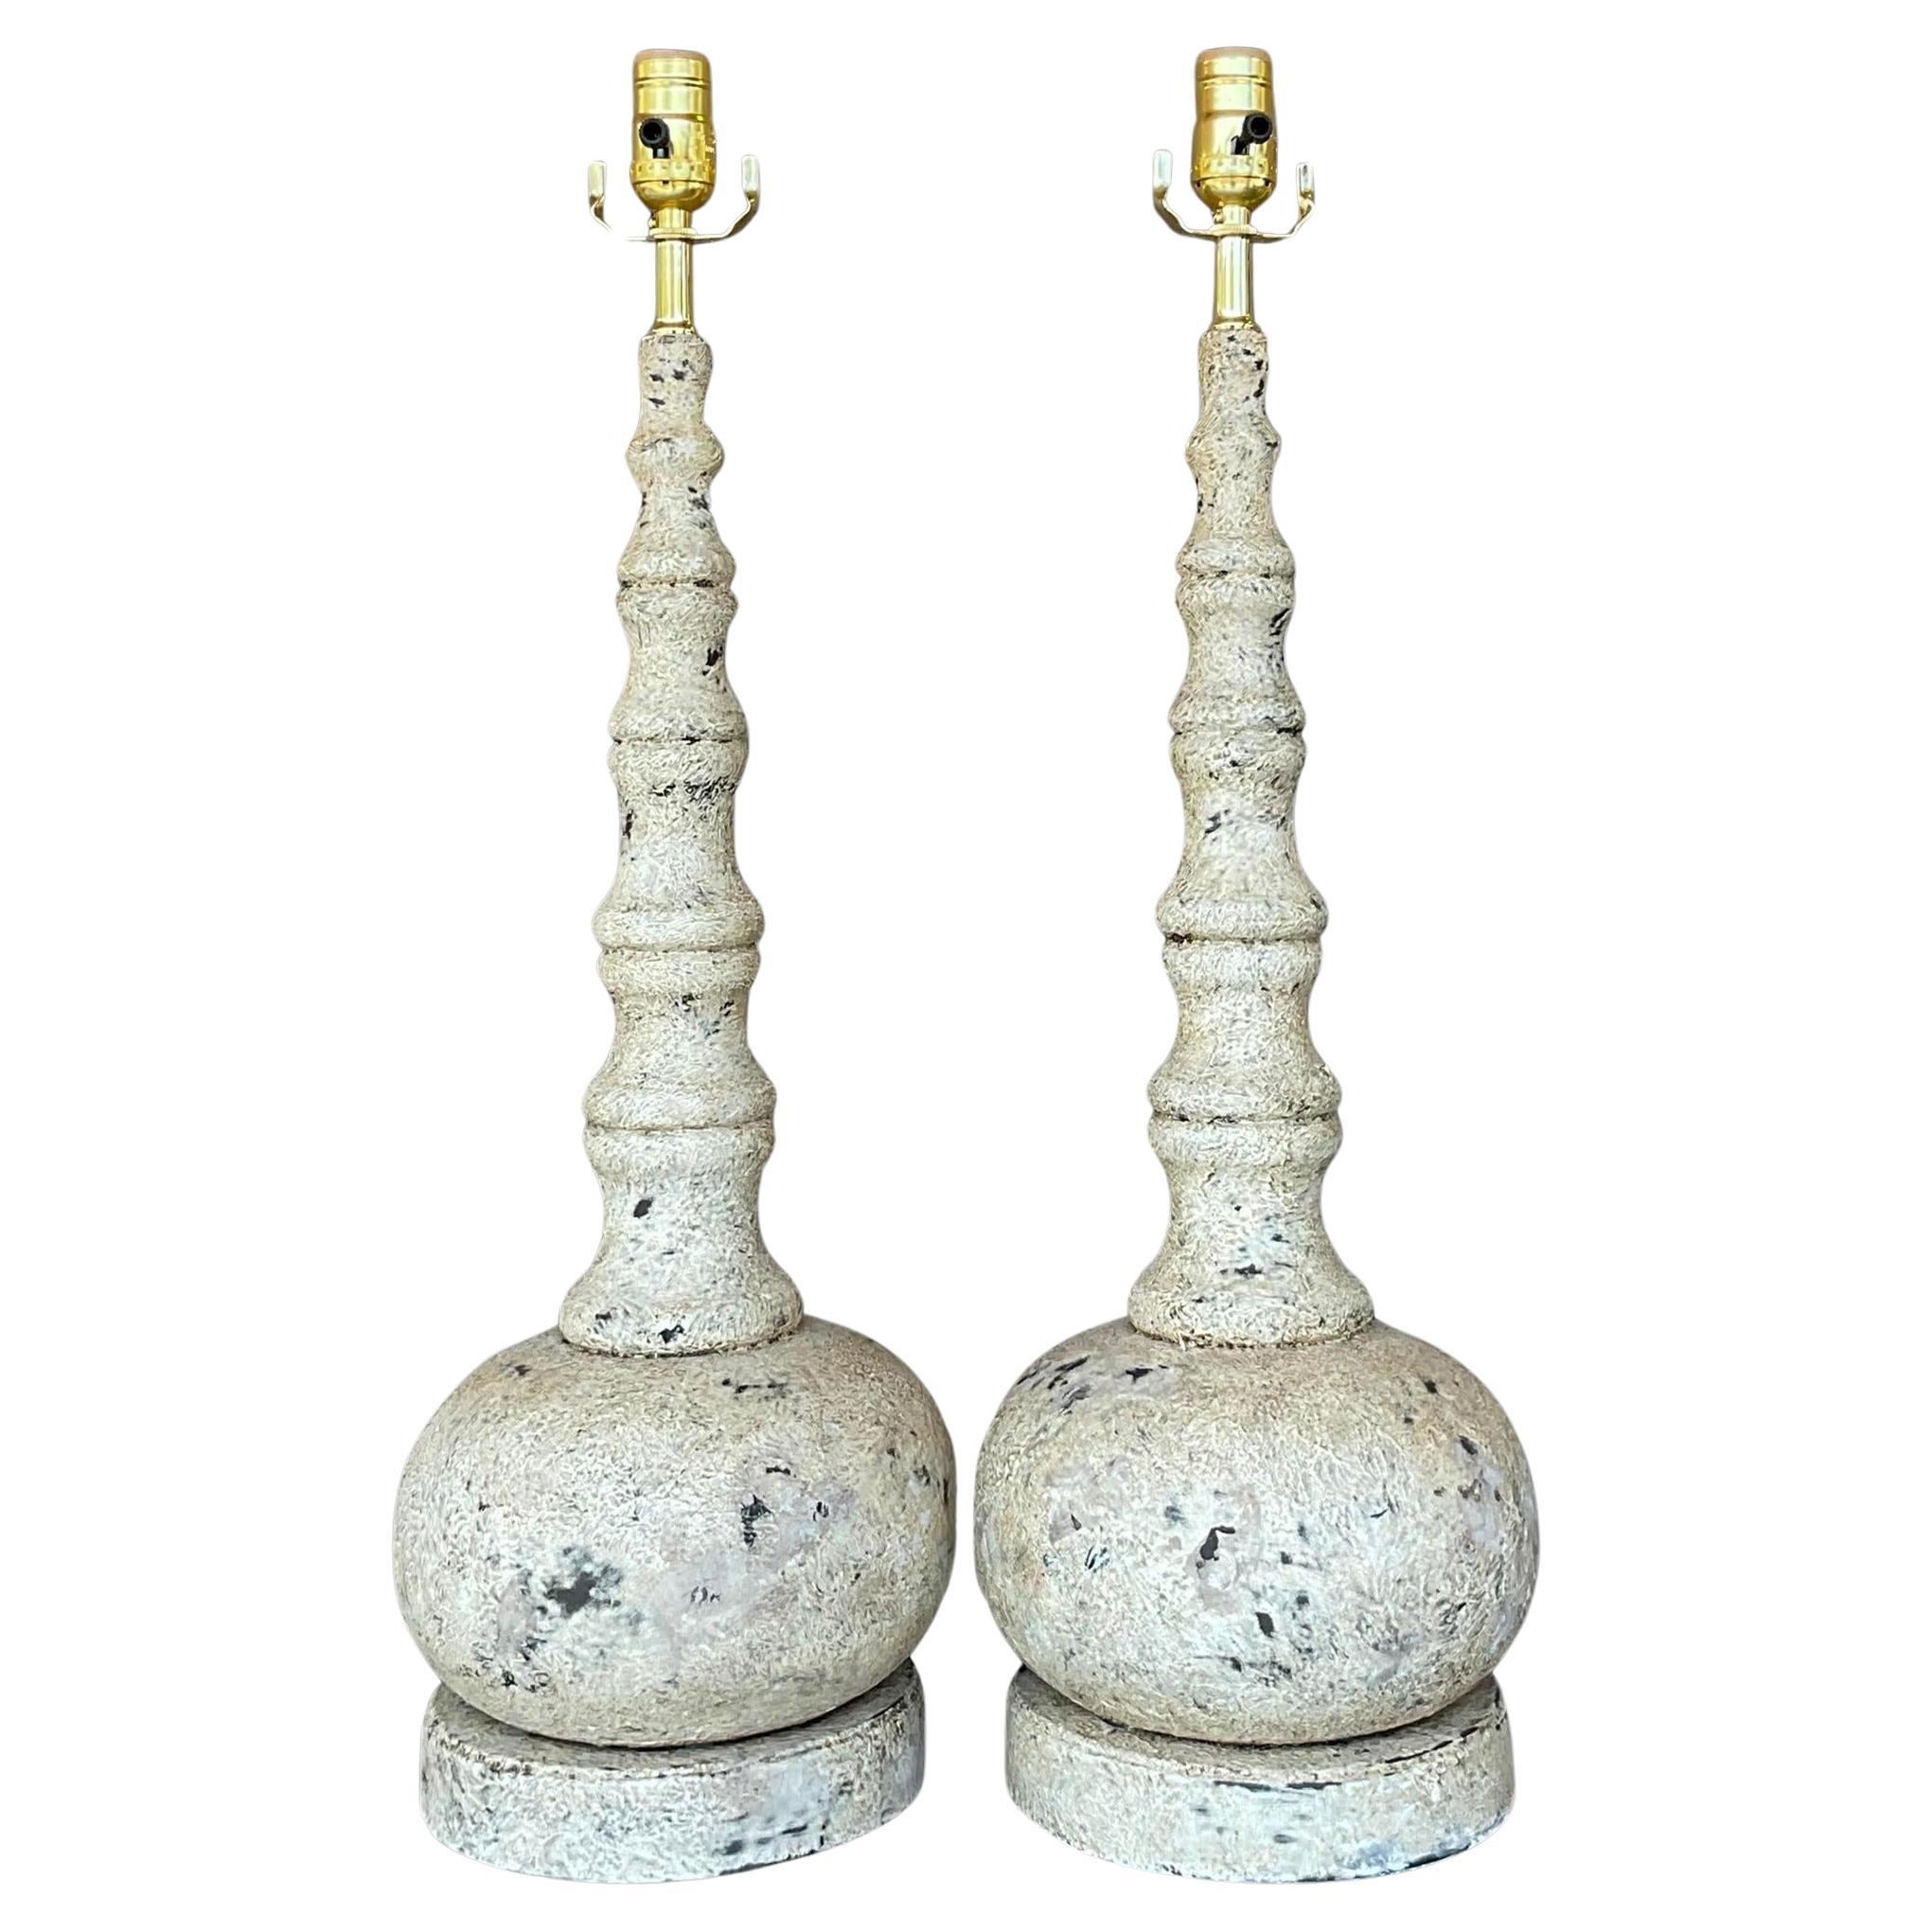 Vintage Boho Patinated Long Neck Lamps - a Pair